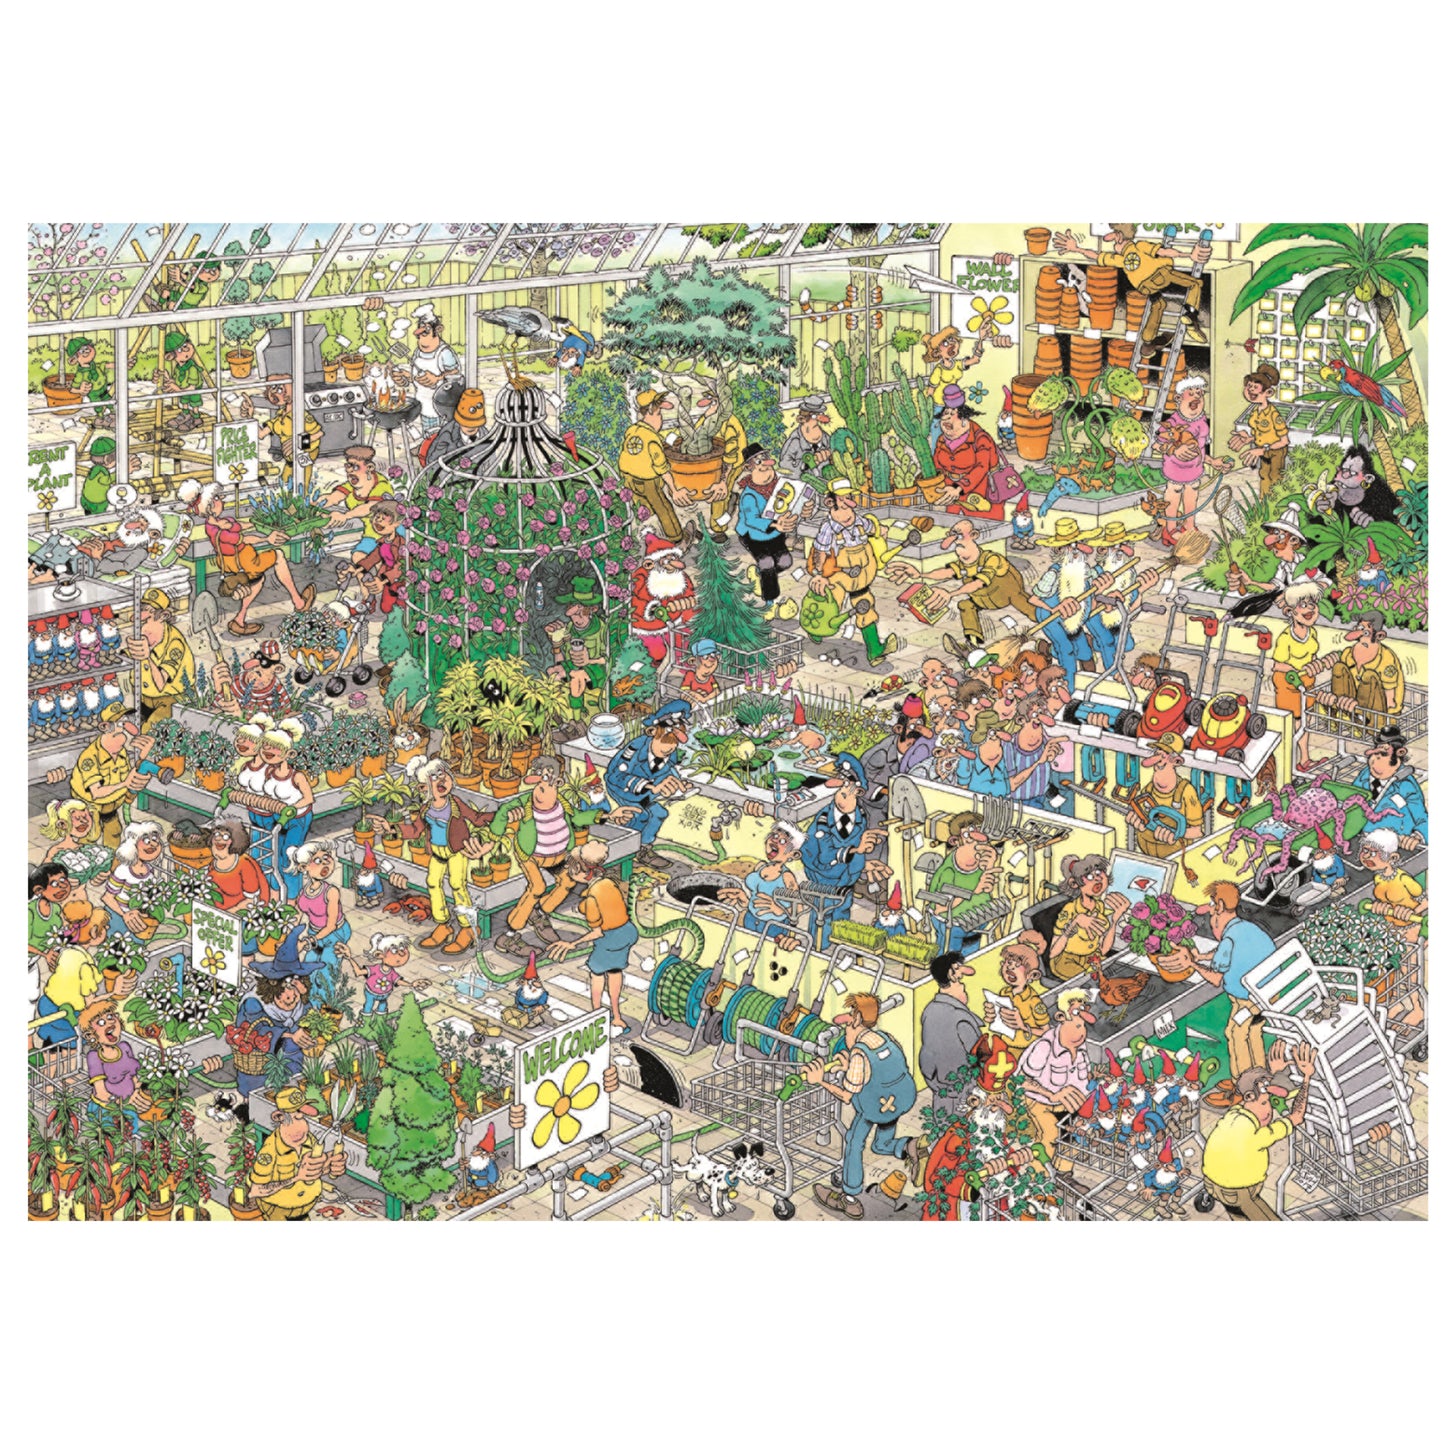 JvH The Garden Centre (1000 pieces) - product image - Jumboplay.com